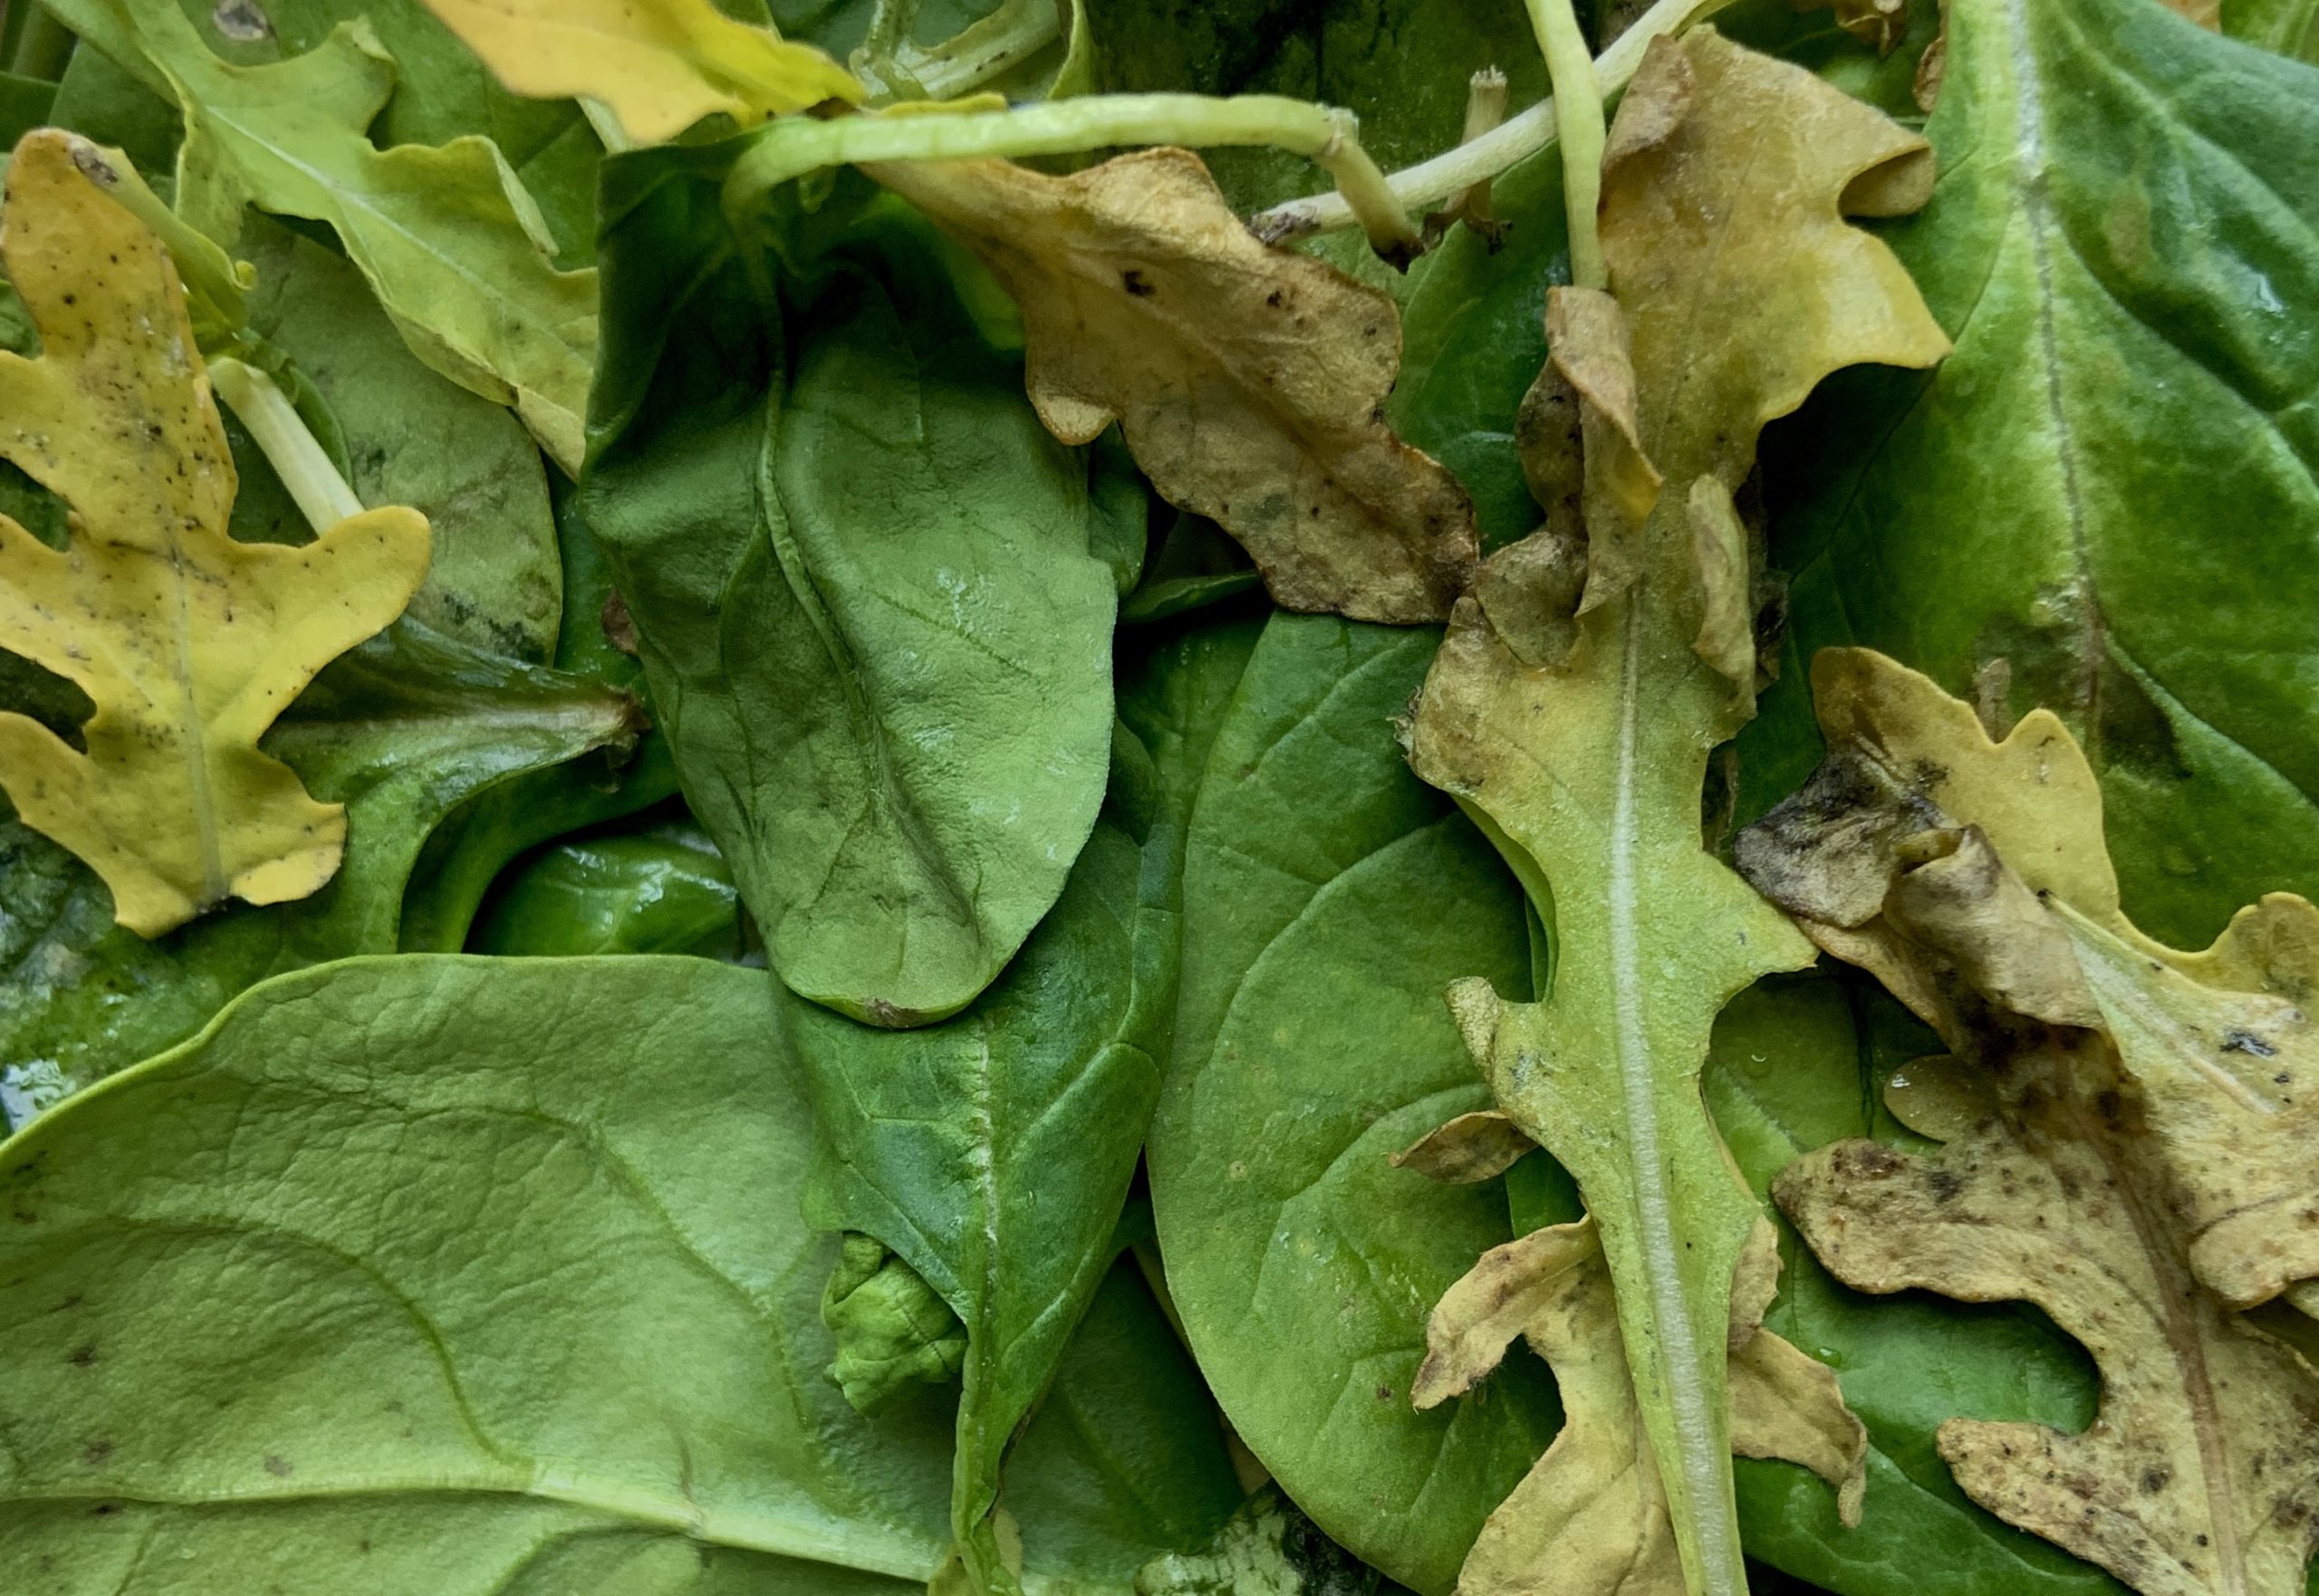 Moldy green leafy vegetables Cladosporium |  moldy food